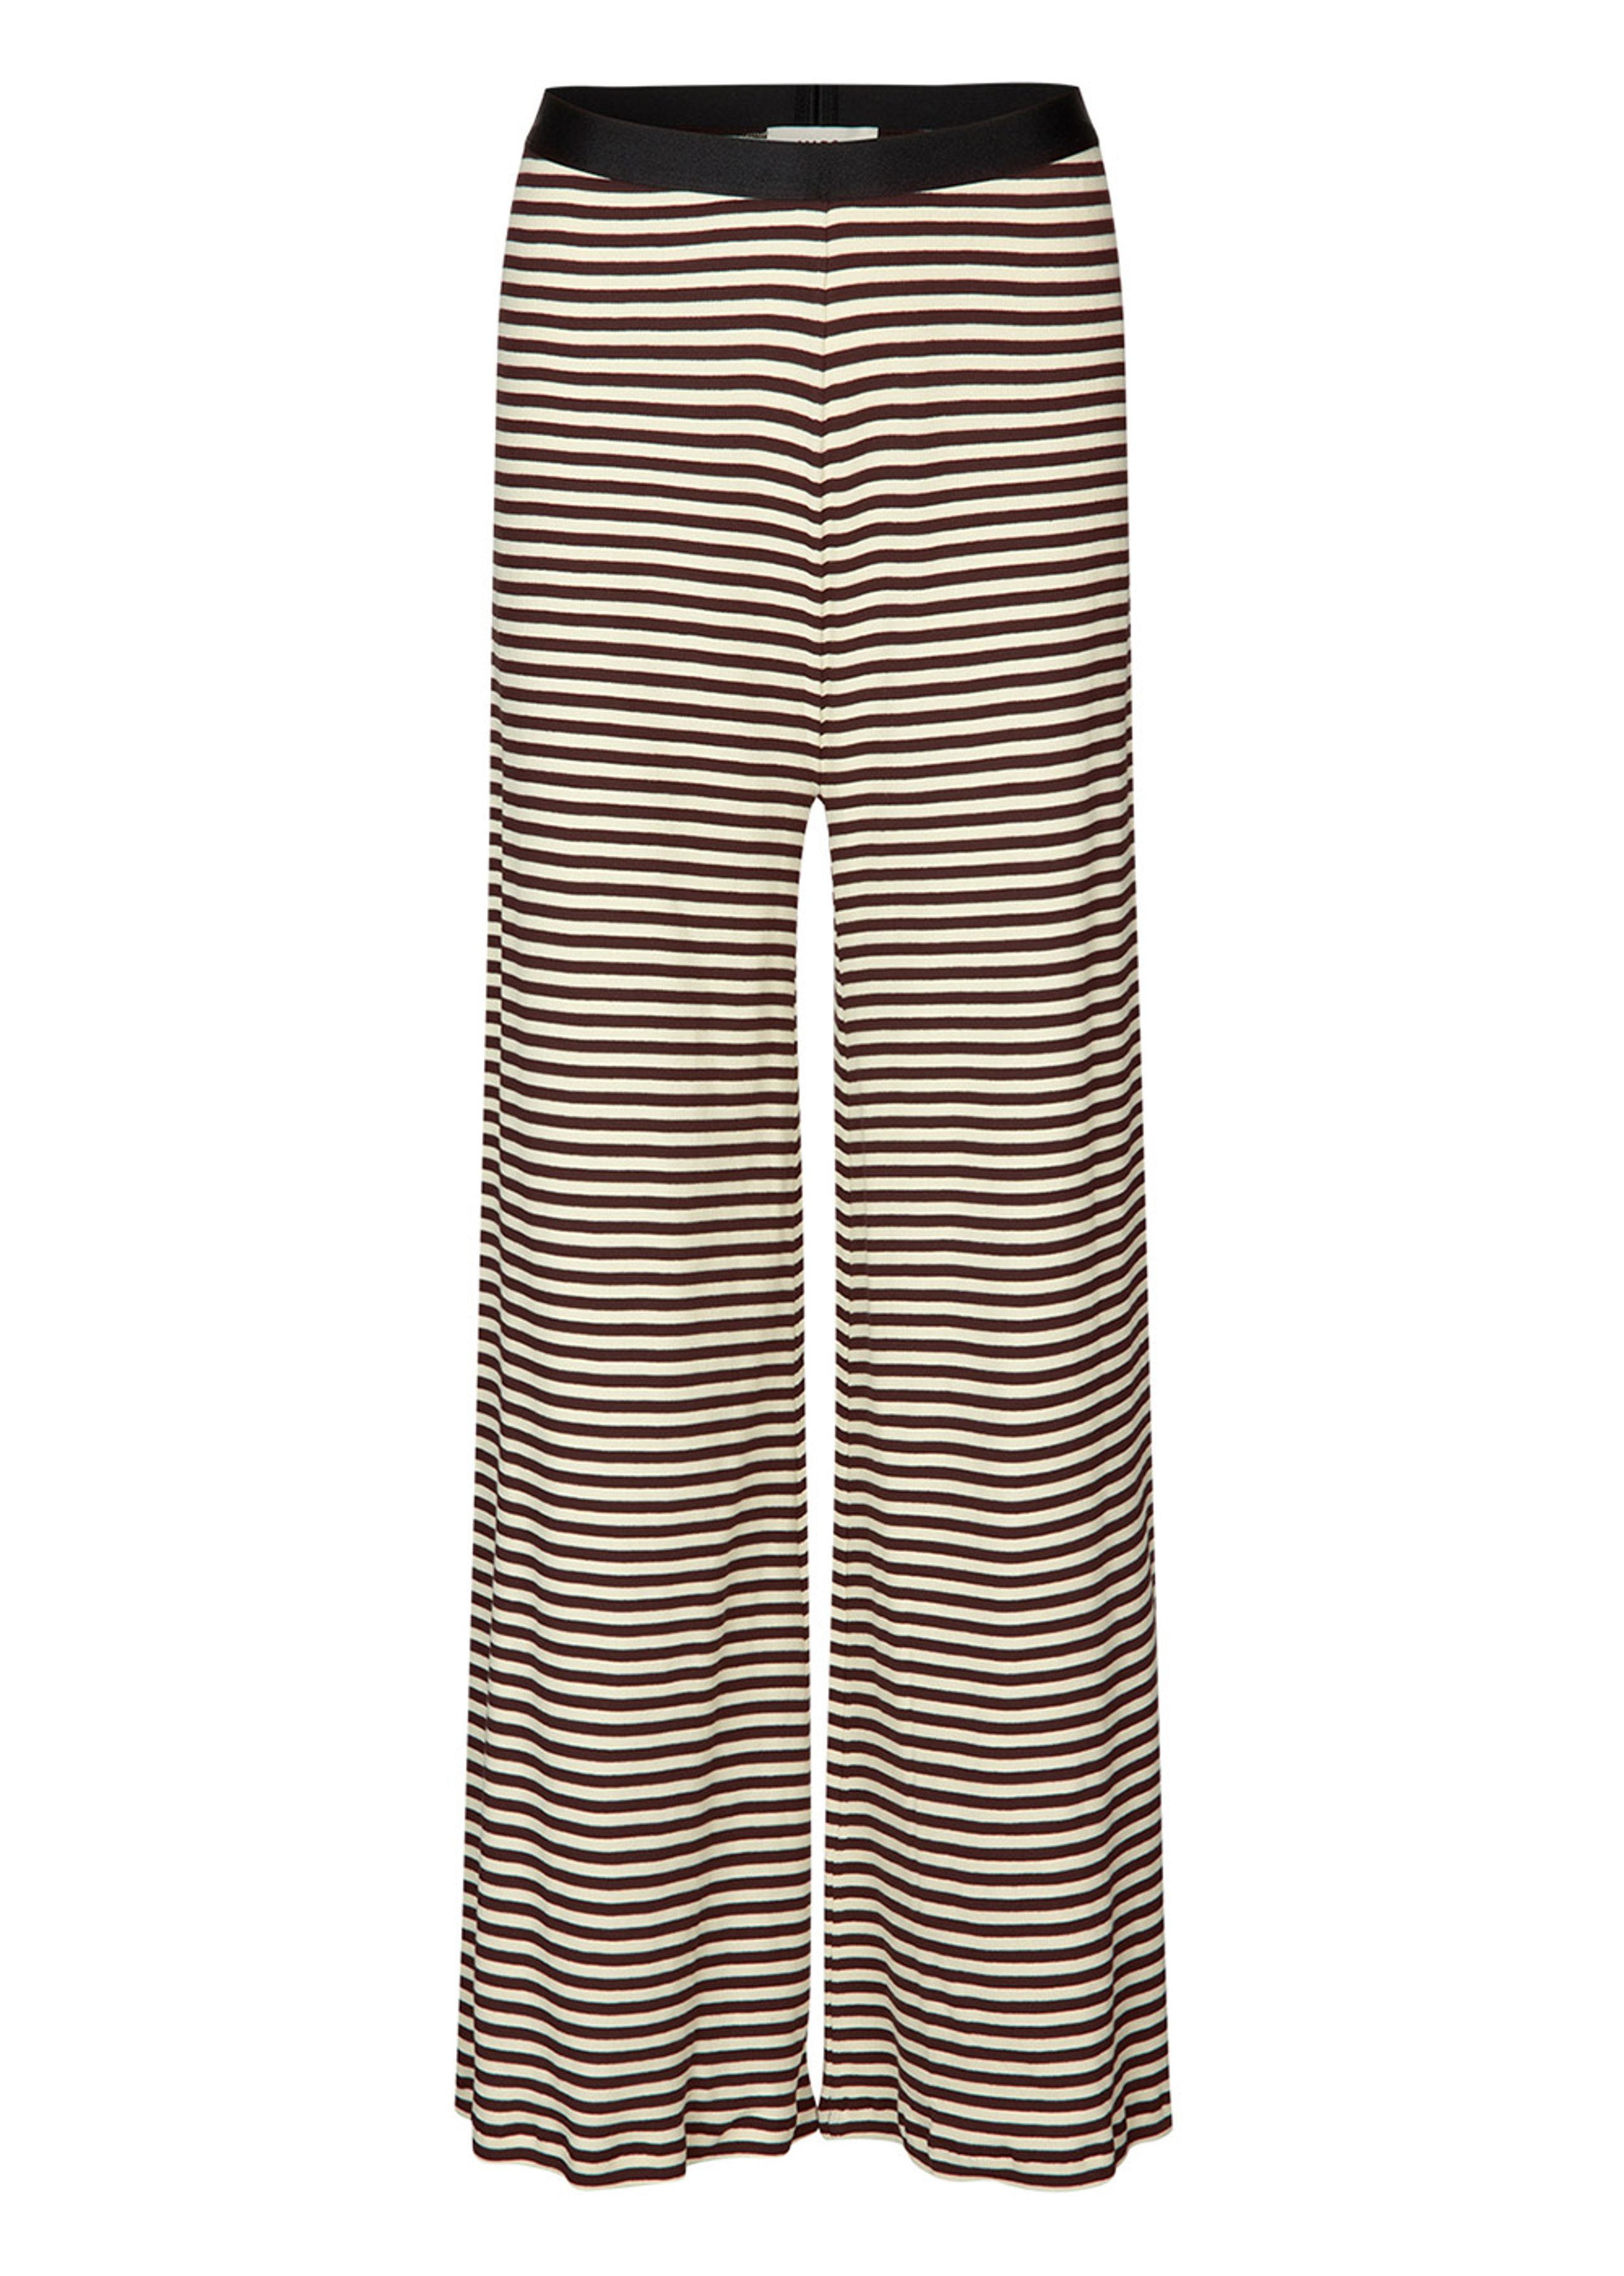 Mads Nørgaard - Hose - 2x2 Cotton Stripe Veran Pants - 2X2 Stripe Black Coffee/Vanill